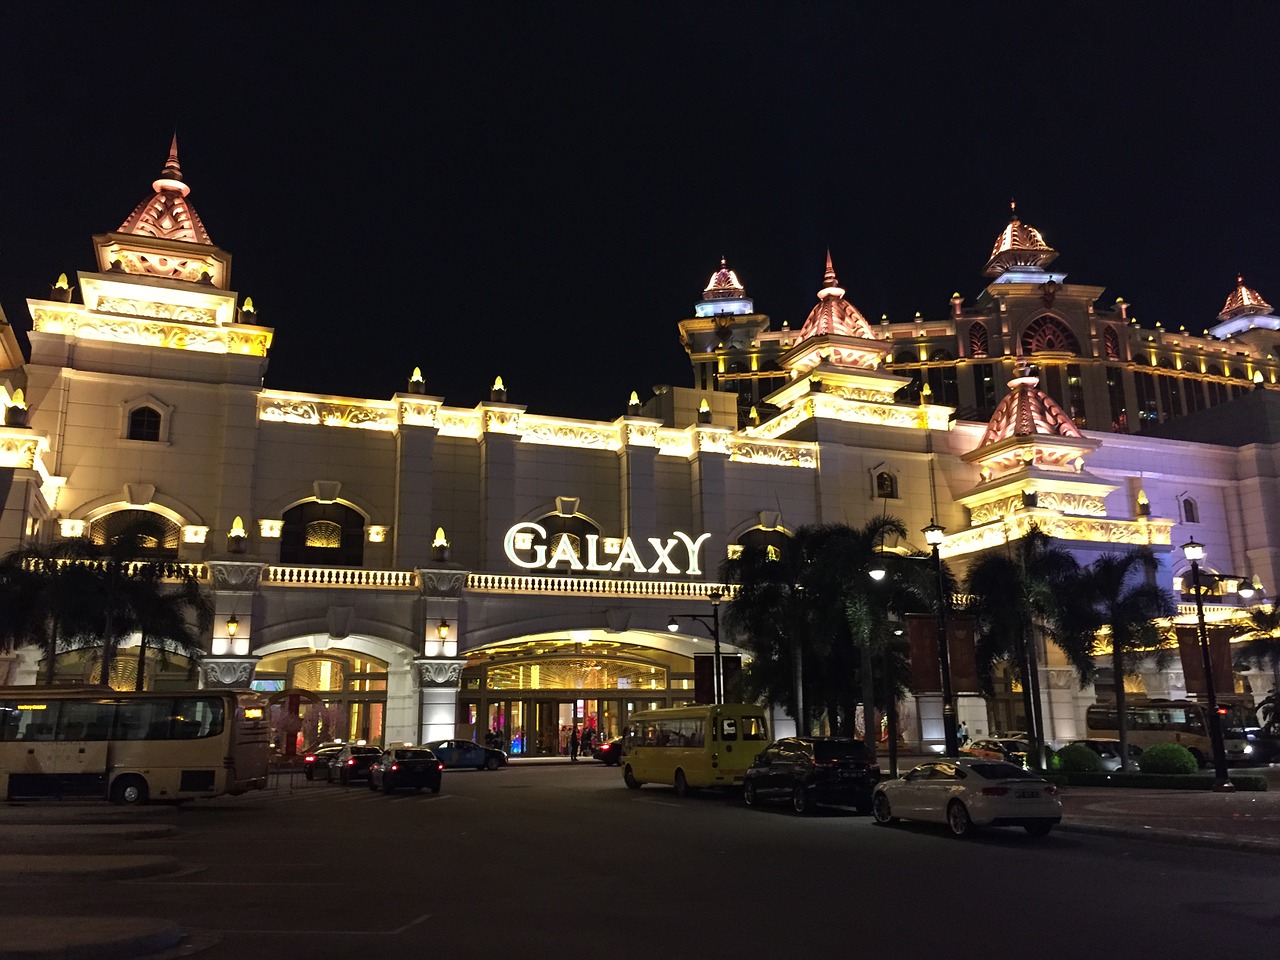 macau galaxy casino night view free photo